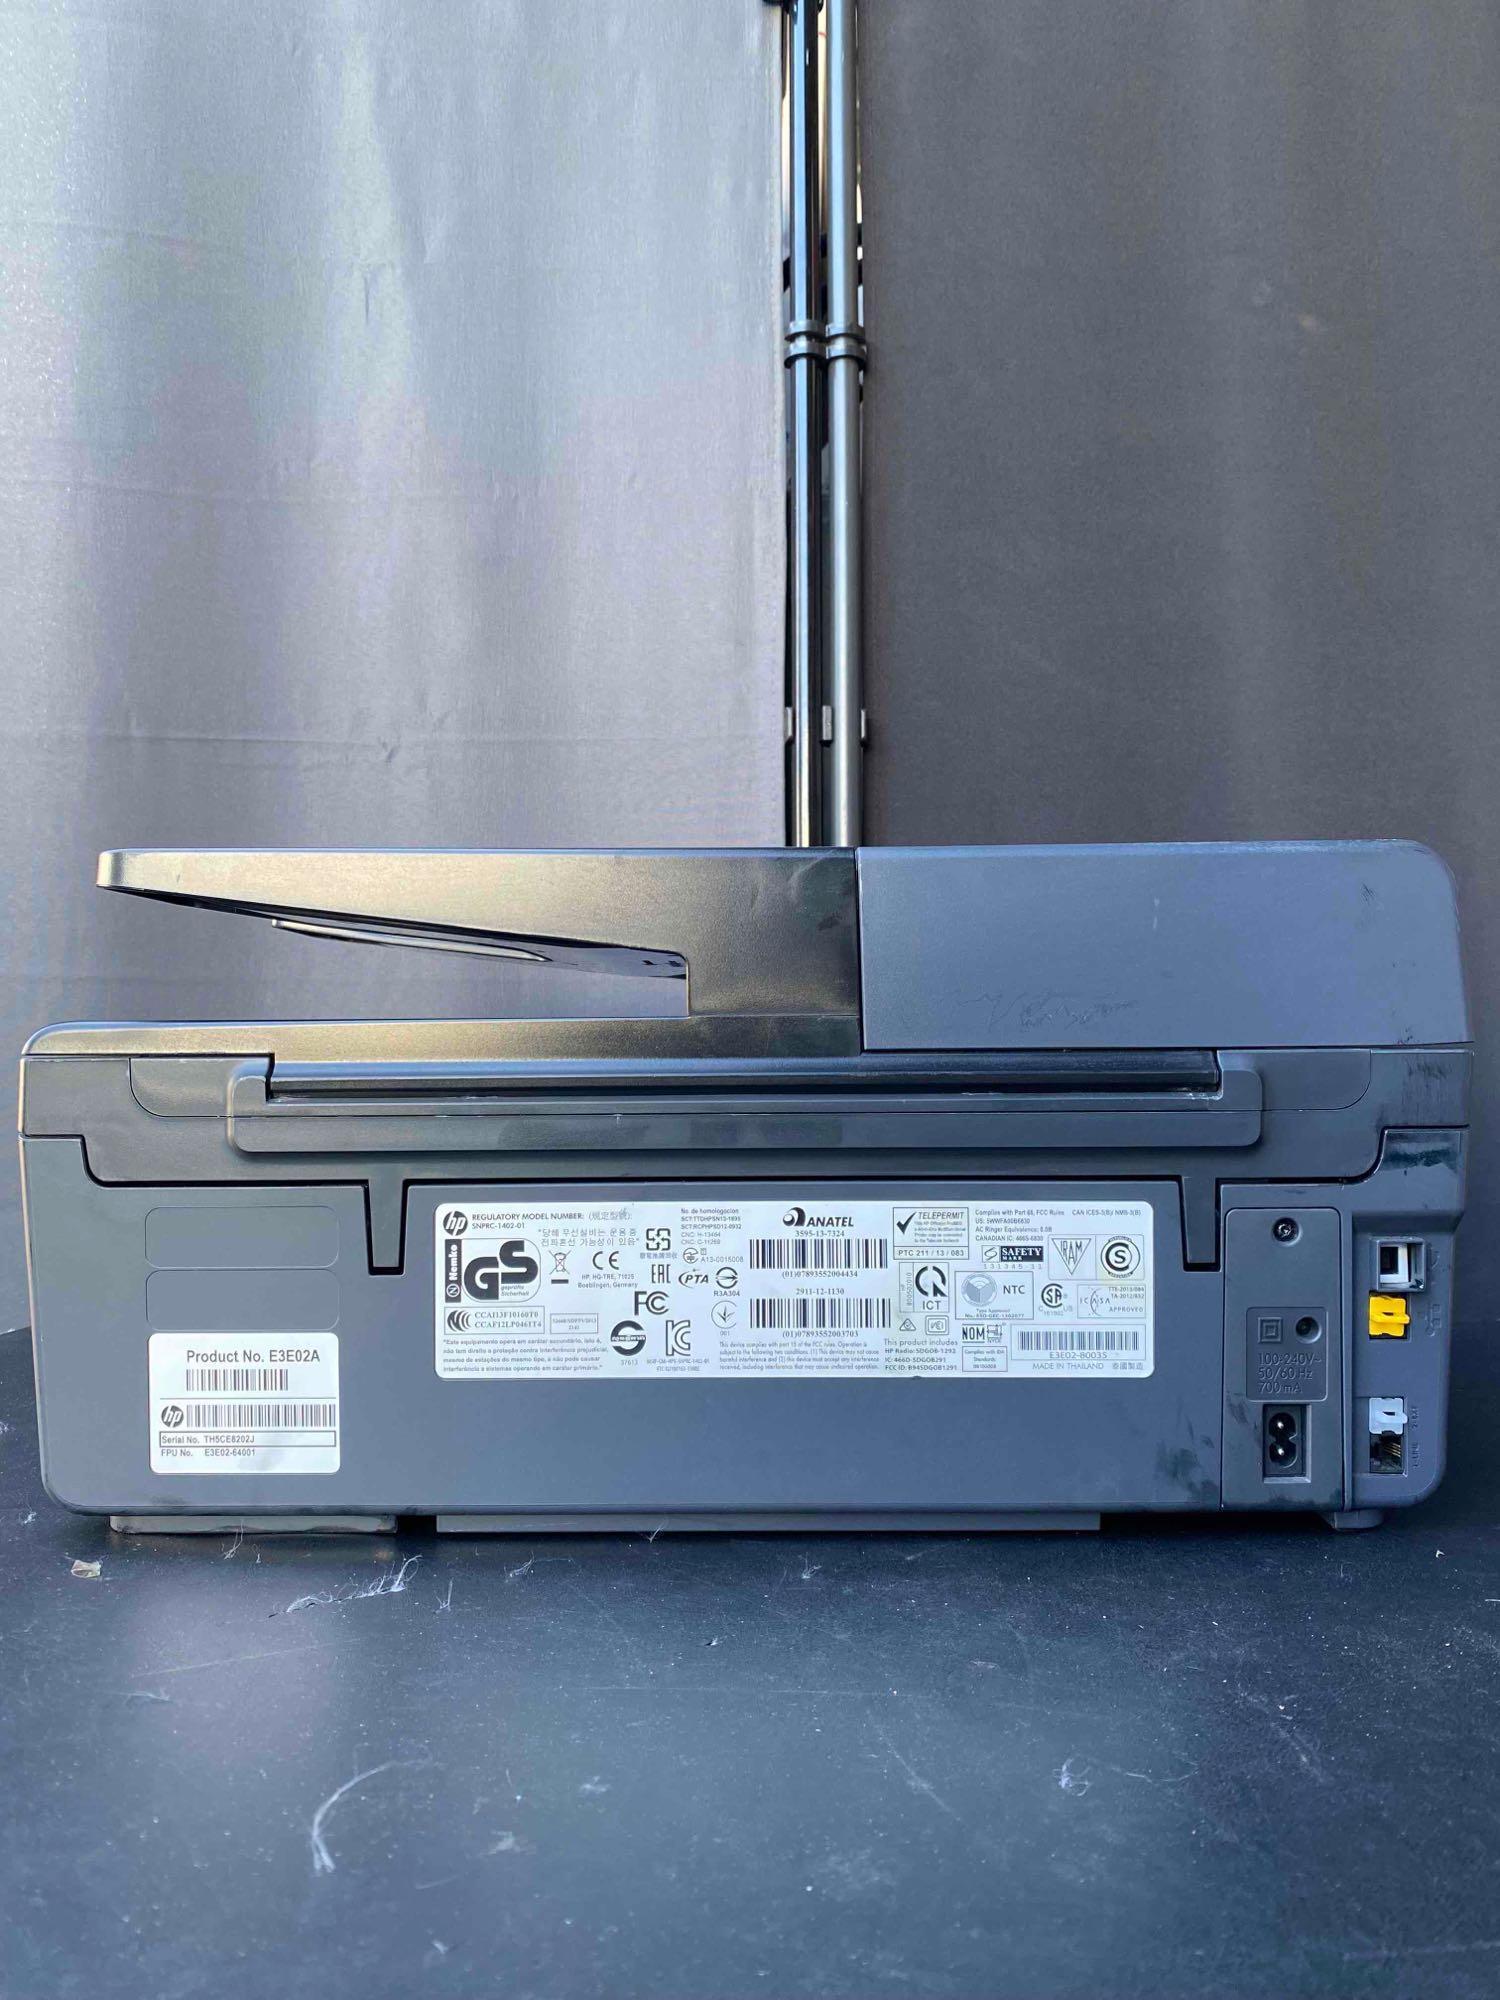 HP OfficeJet Pro 6830 Wireless All-in-One Photo Printer